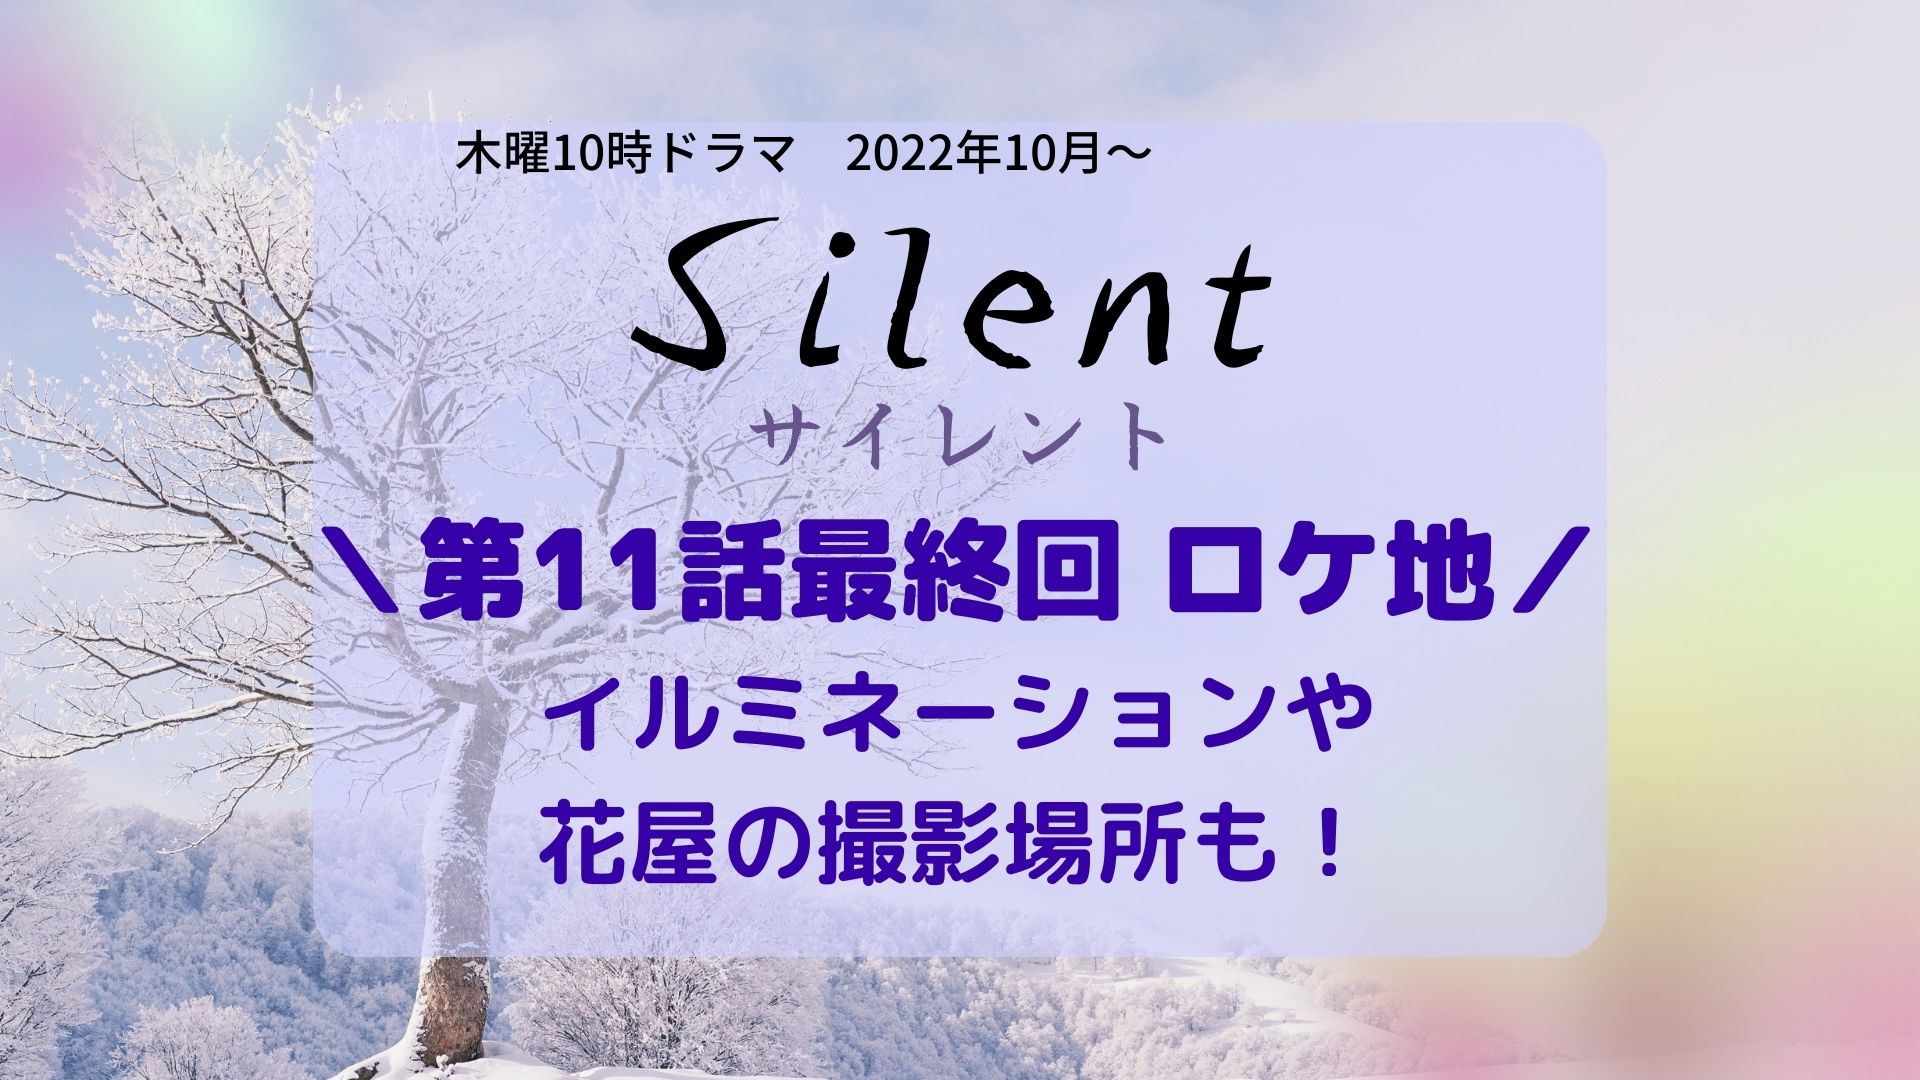 Silent (サイレント)11話最終回ロケ地